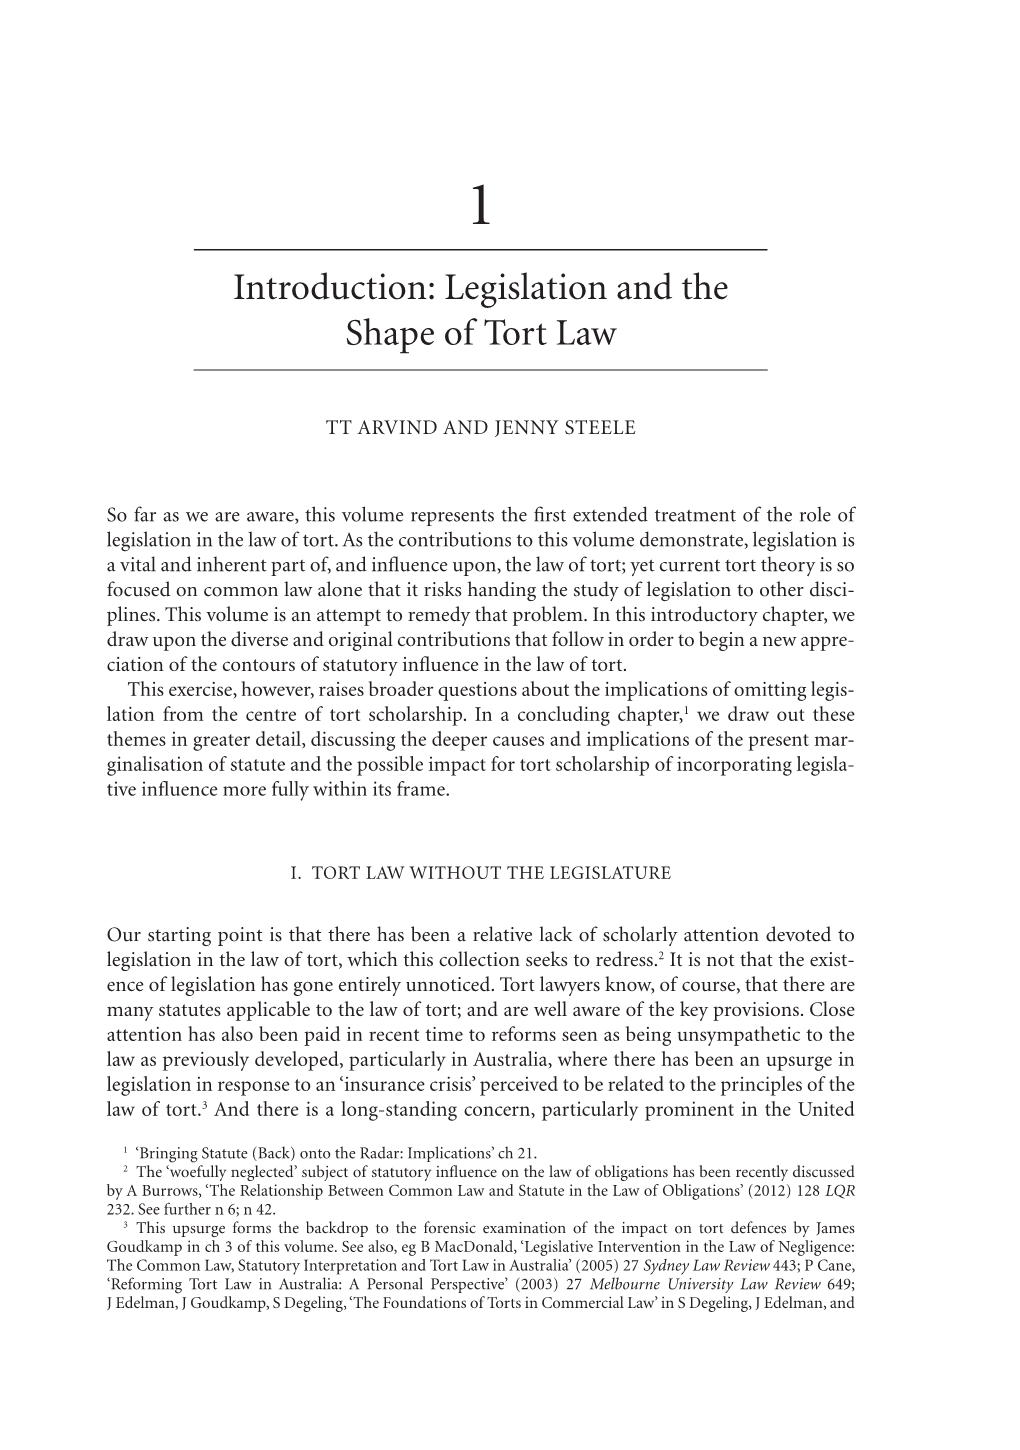 Legislation and the Shape of Tort Law